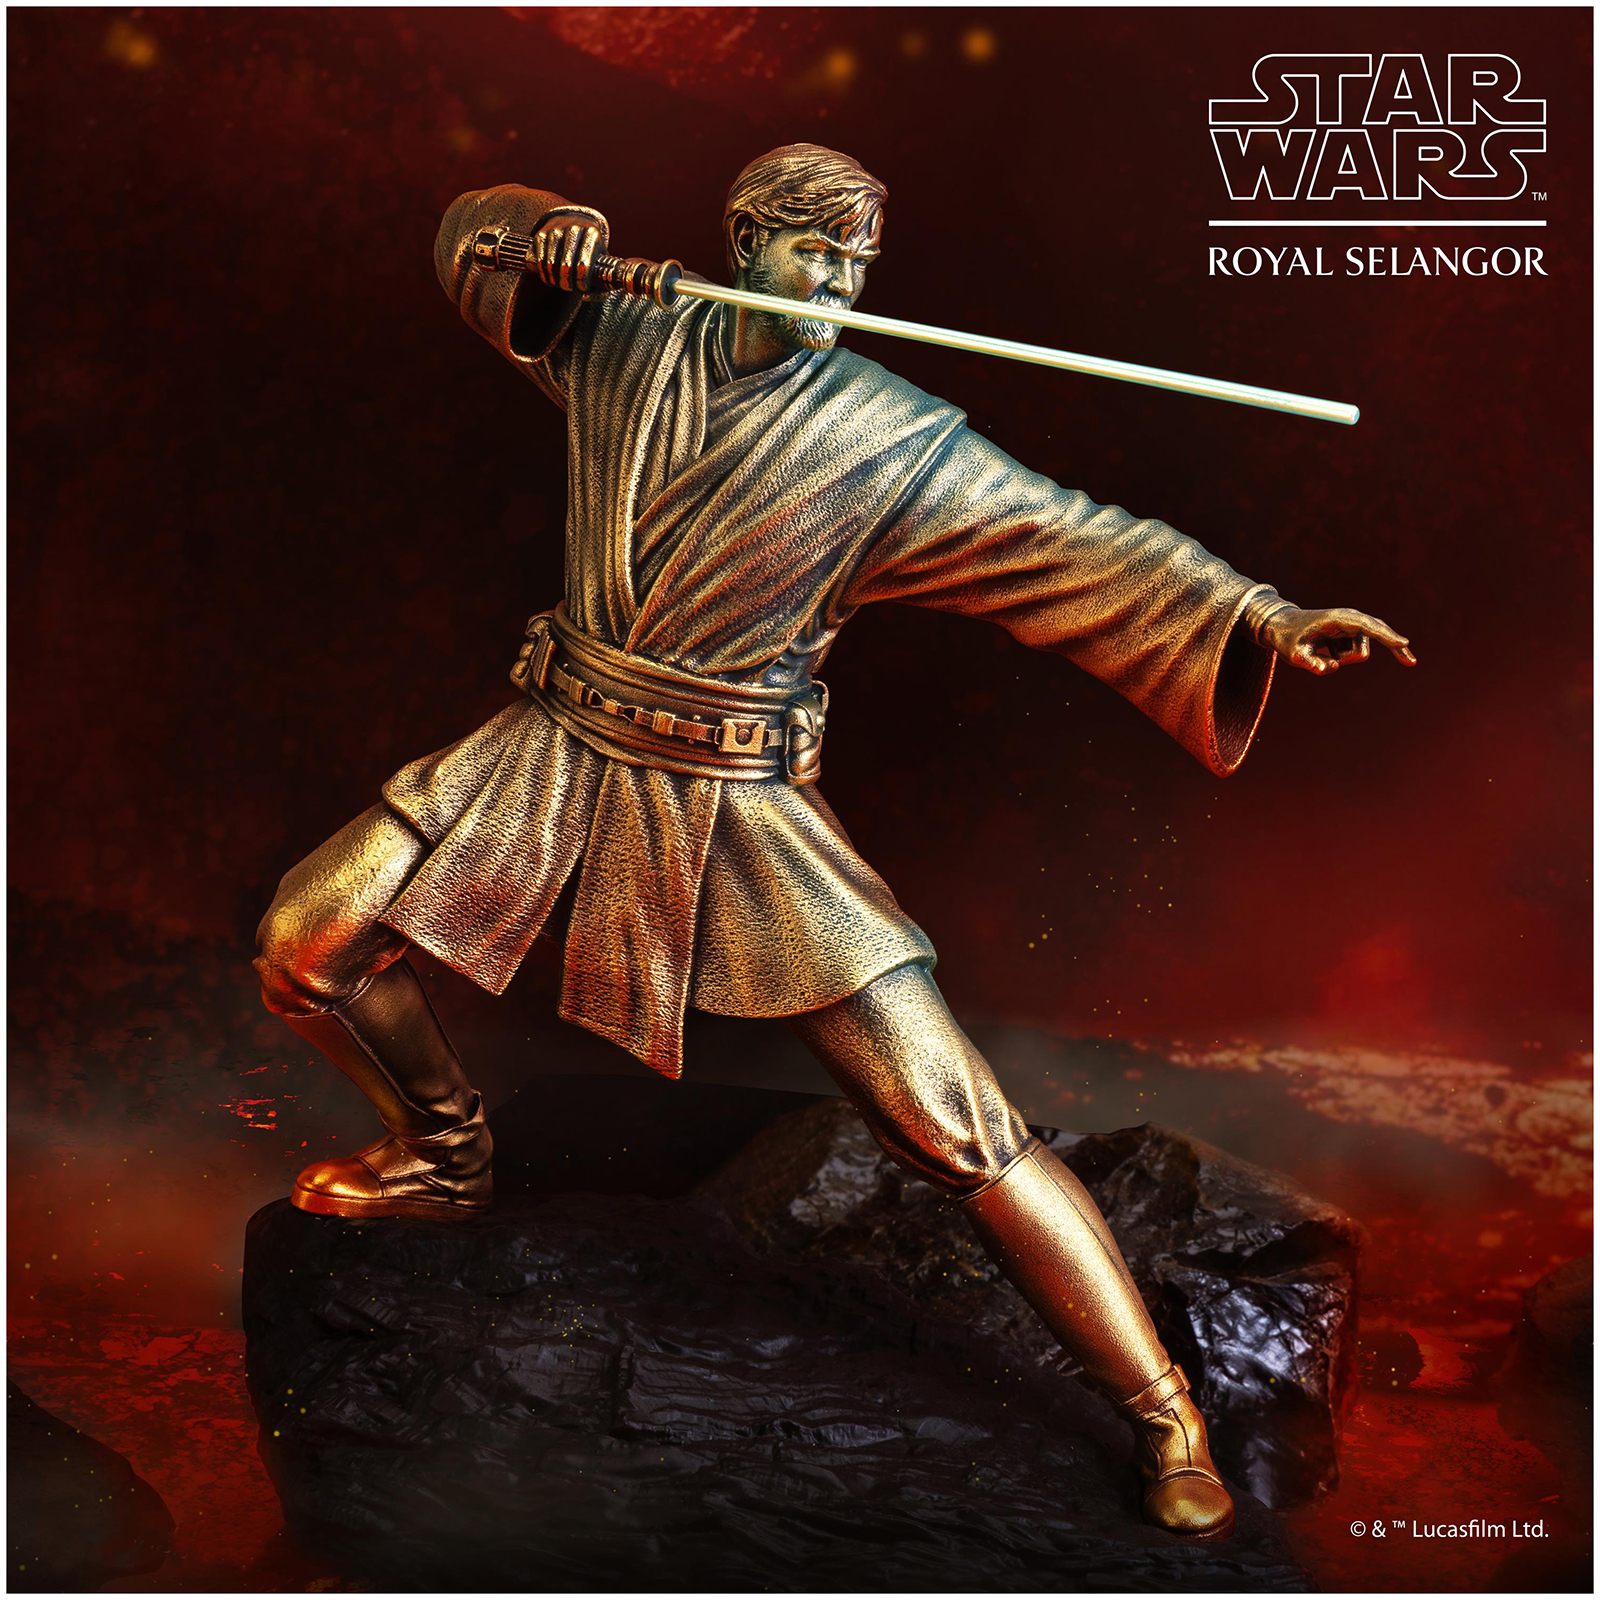 Image showing Statue of Obi Wan Kenobi. Text on screen reads Star Wars Royal Selangor. Lucasfilm Ltd